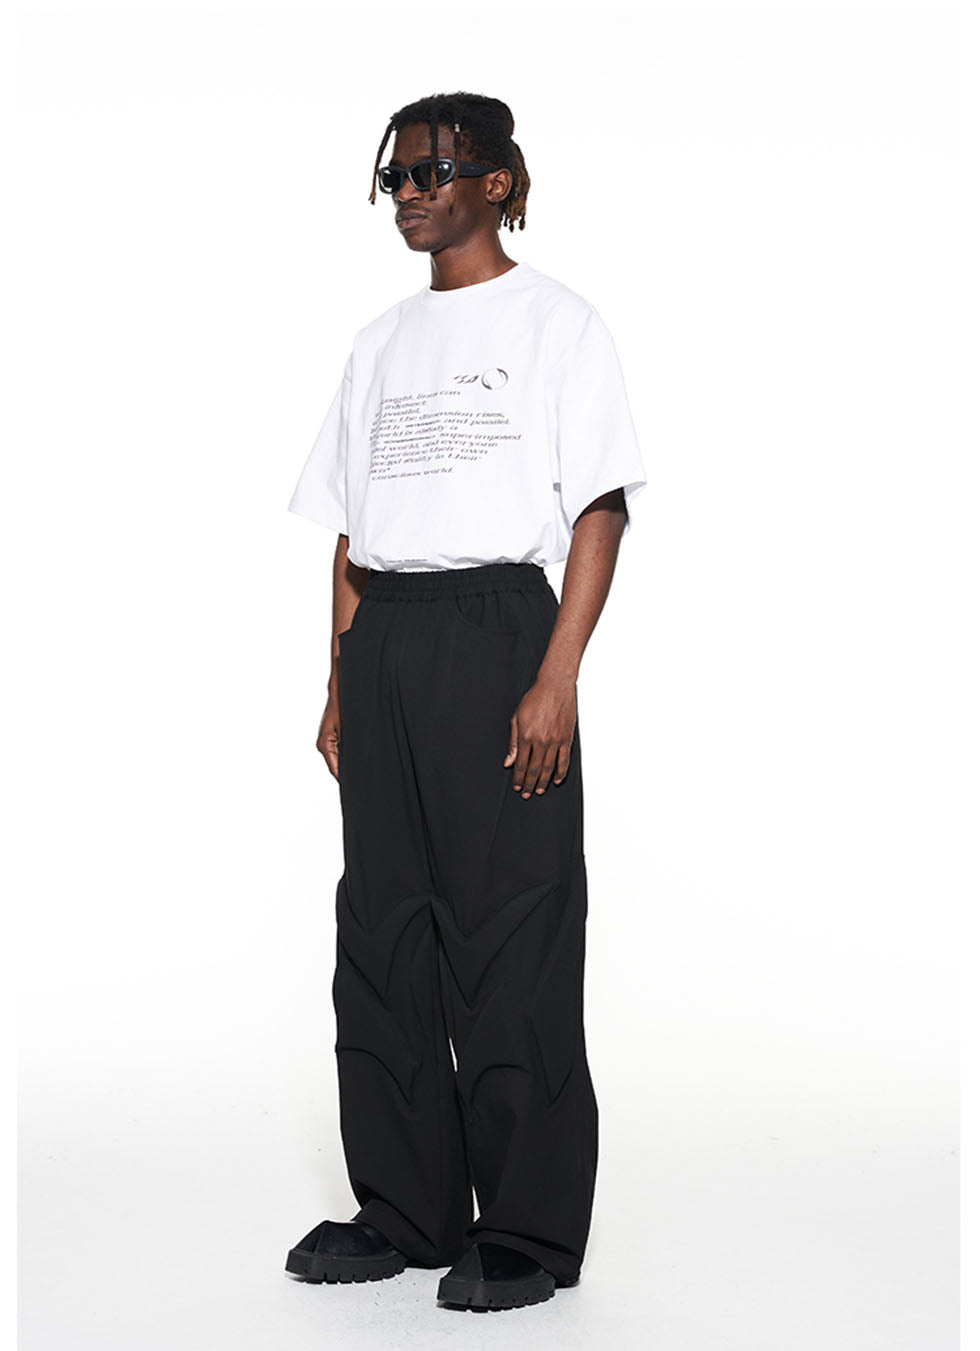 Molded design silhouette pants